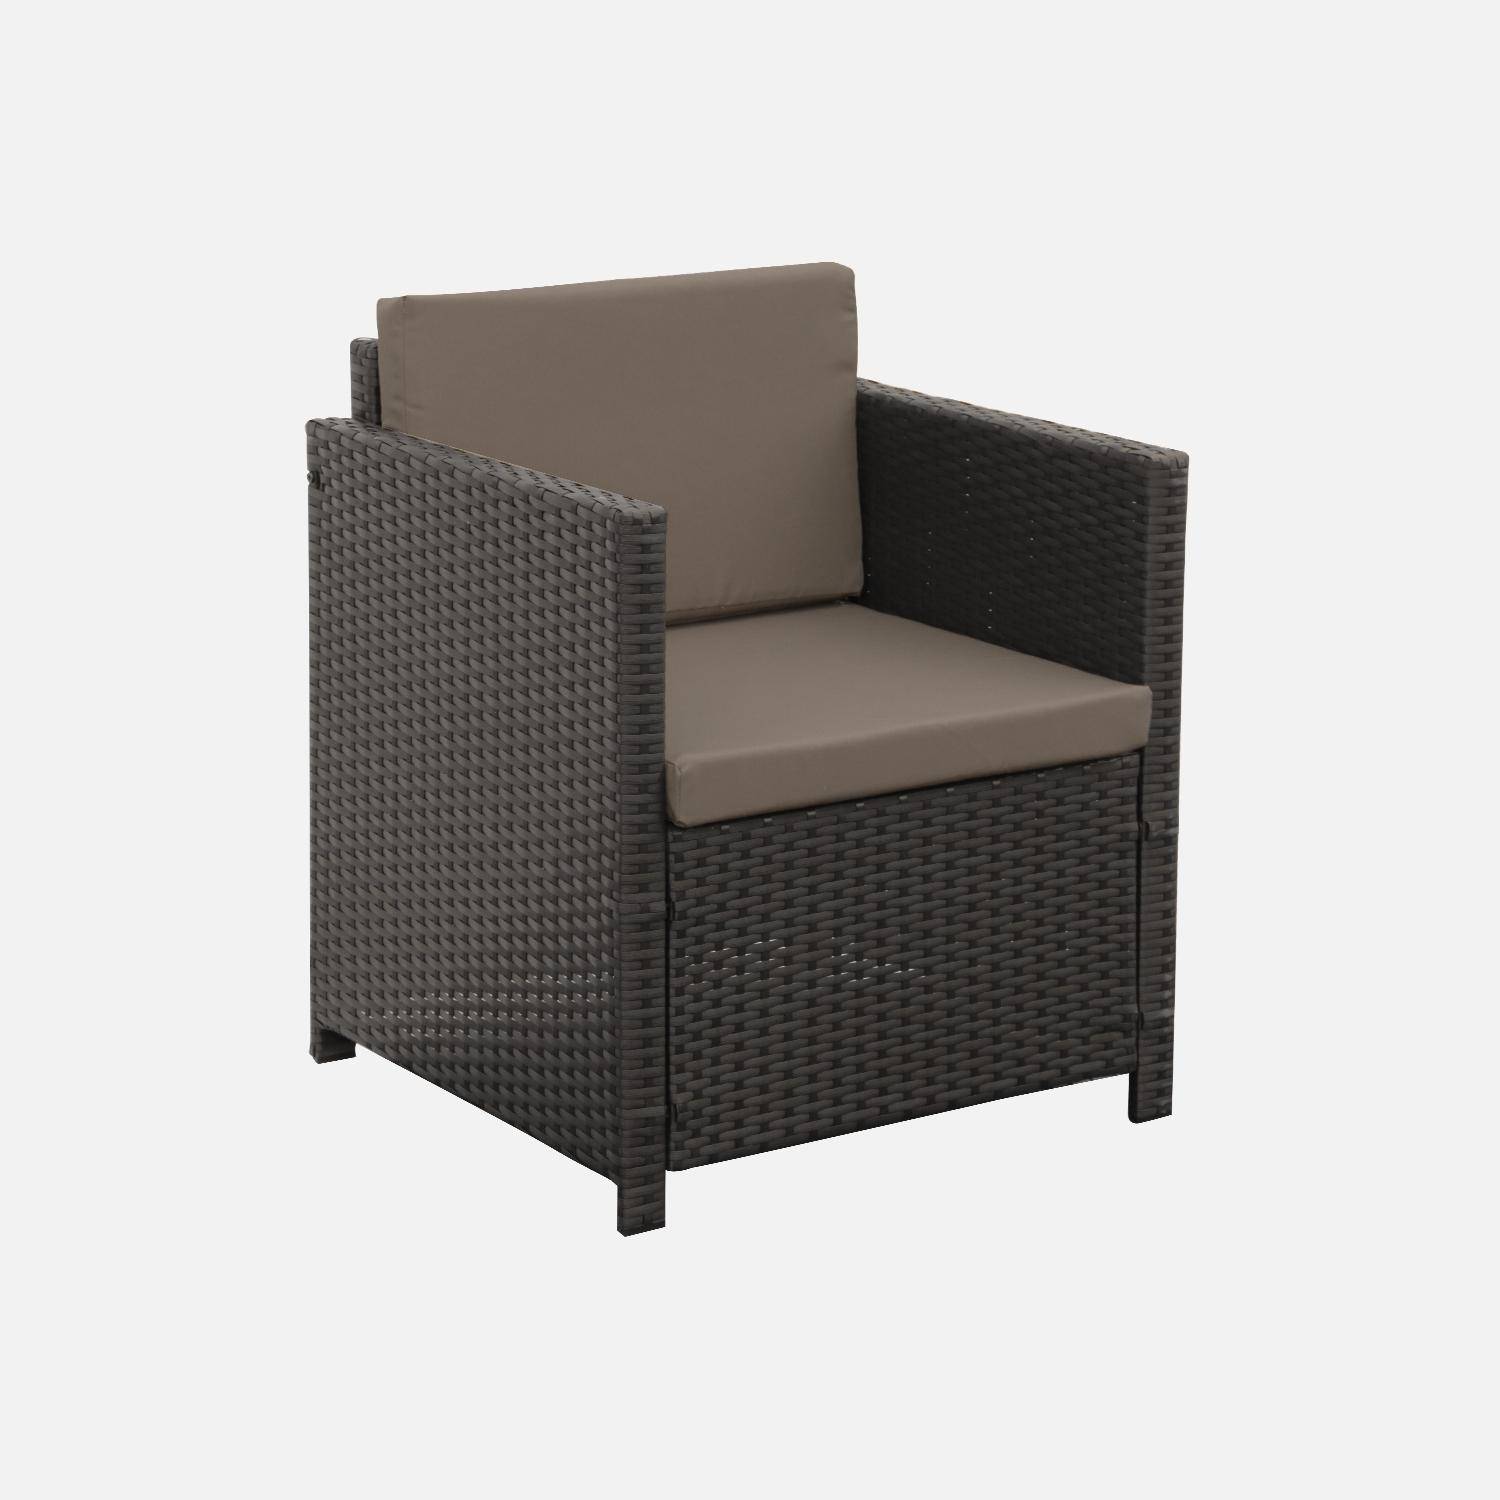 4-seater polyrattan garden sofa set - sofa, 2 armchairs, coffee table - Perugia - Brown rattan, Chocolate cushions,sweeek,Photo4